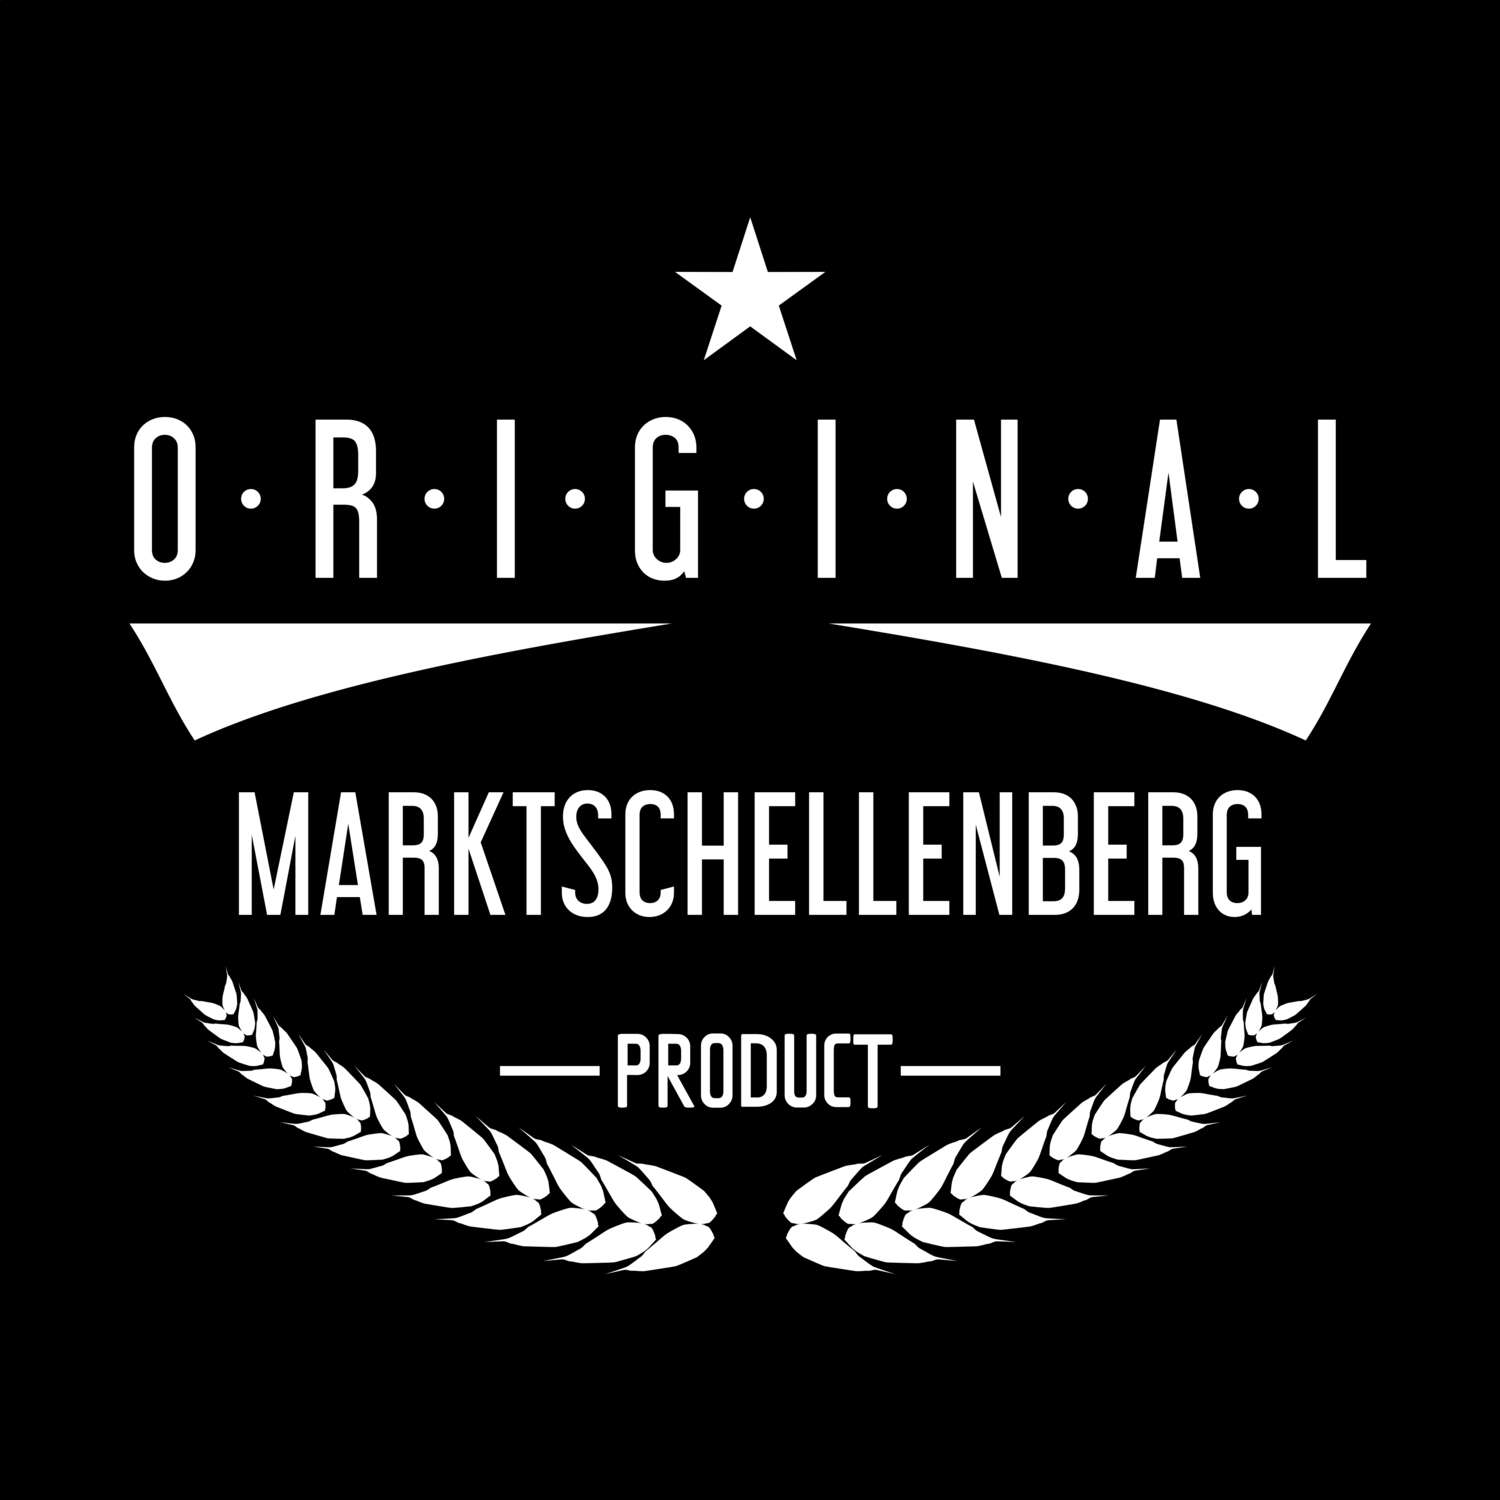 Marktschellenberg T-Shirt »Original Product«